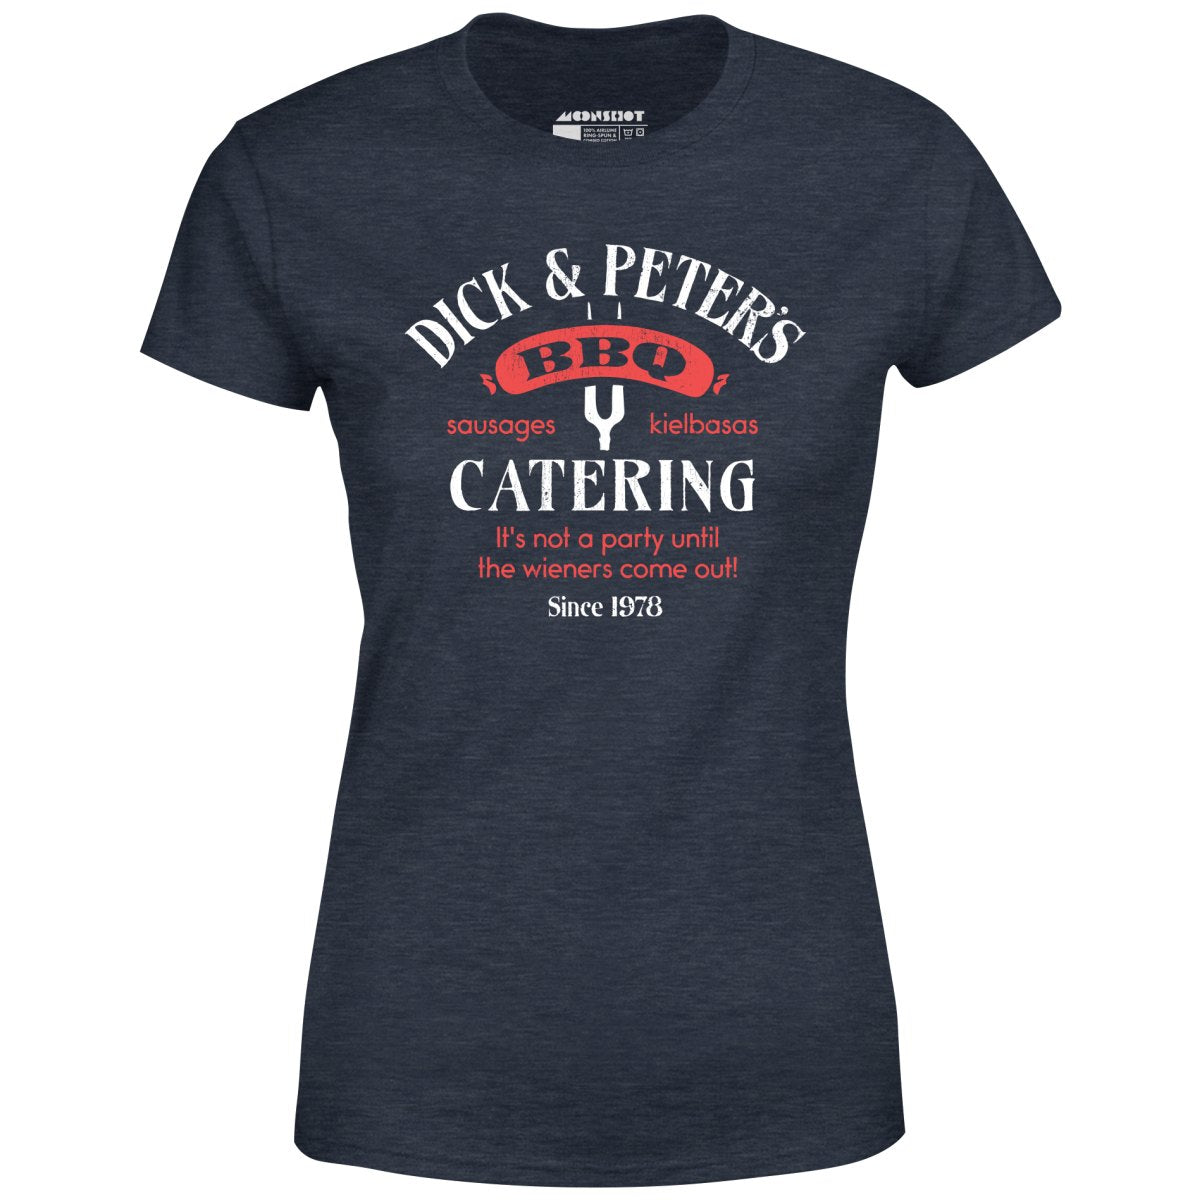 Dick & Peter's BBQ Catering - Women's T-Shirt